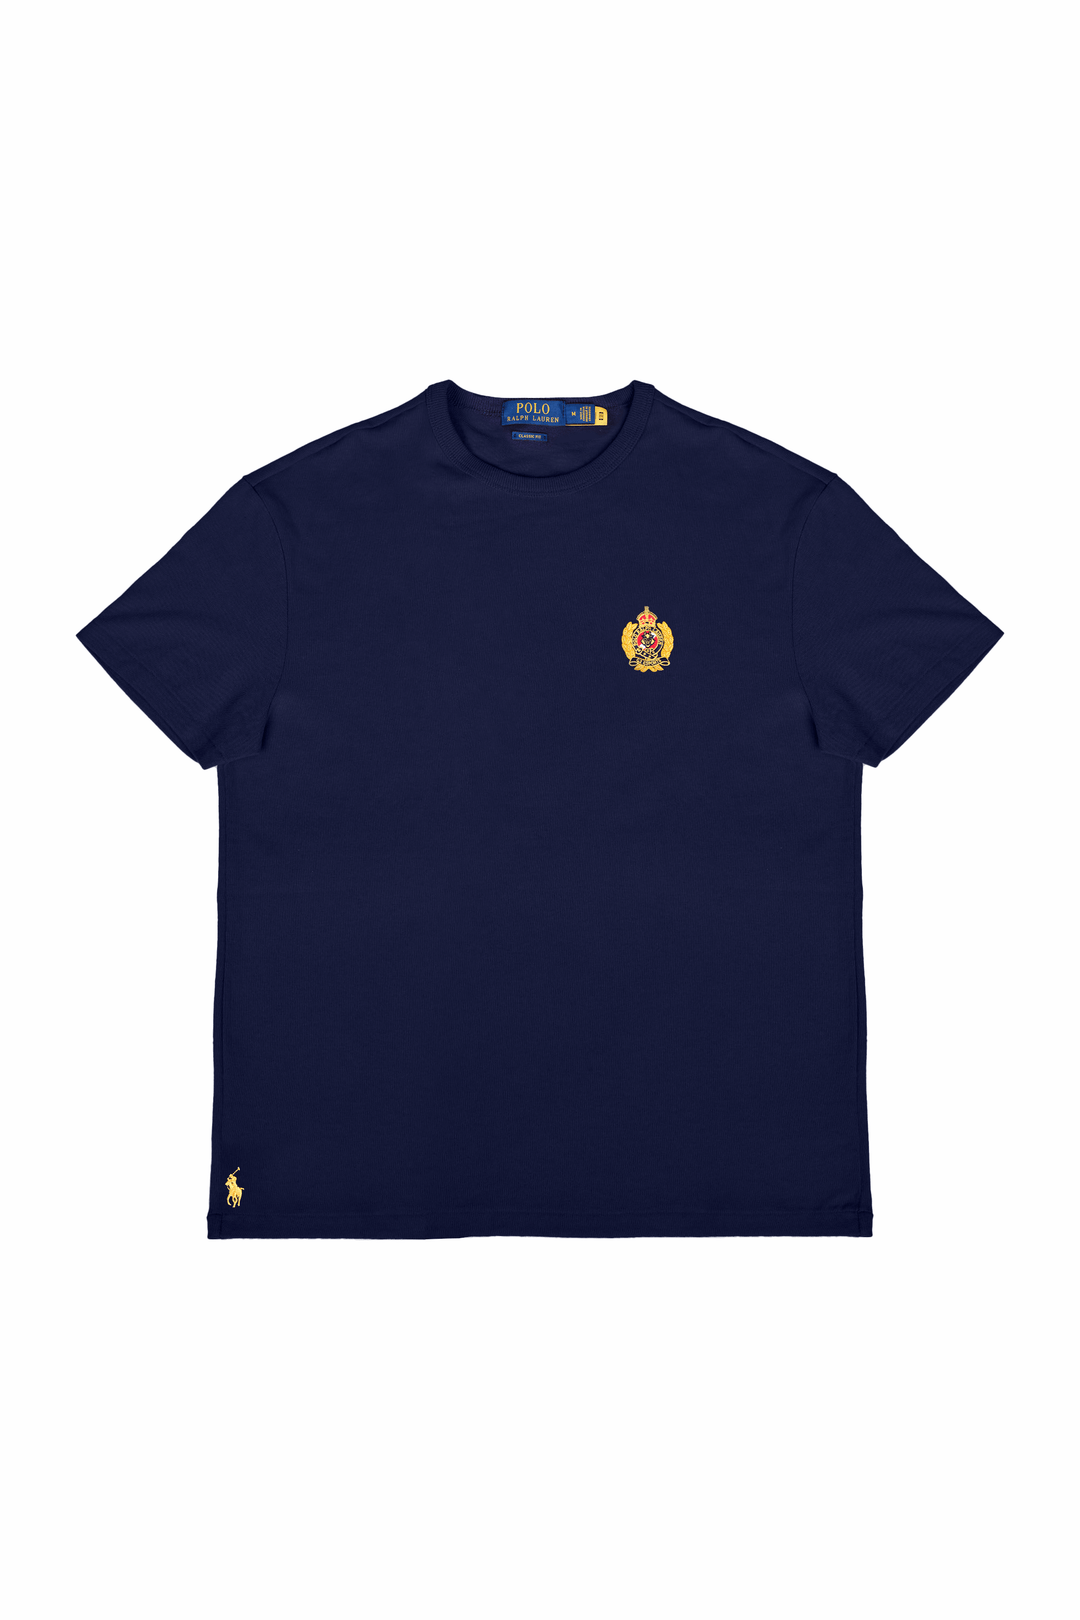 Polo x G2 Esports Unisex - T-shirt - Navy